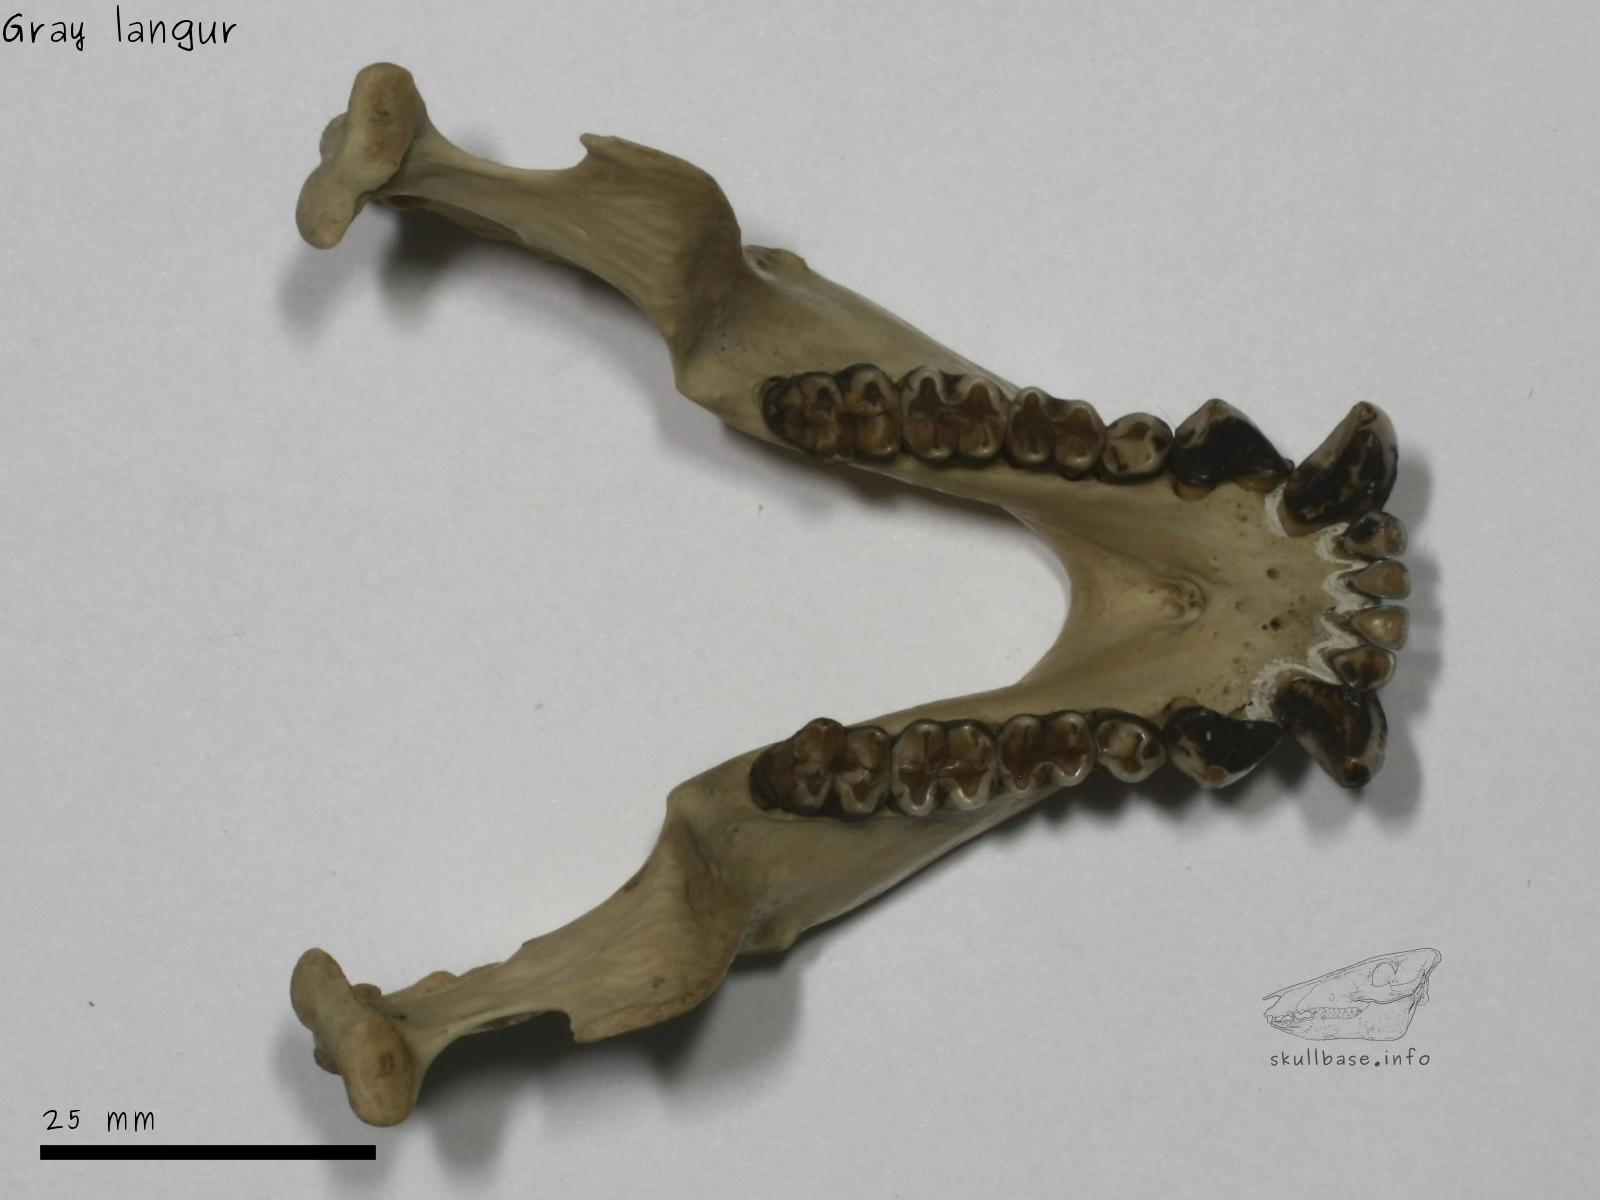 Gray langur (Semnopithecus entellus) jaw